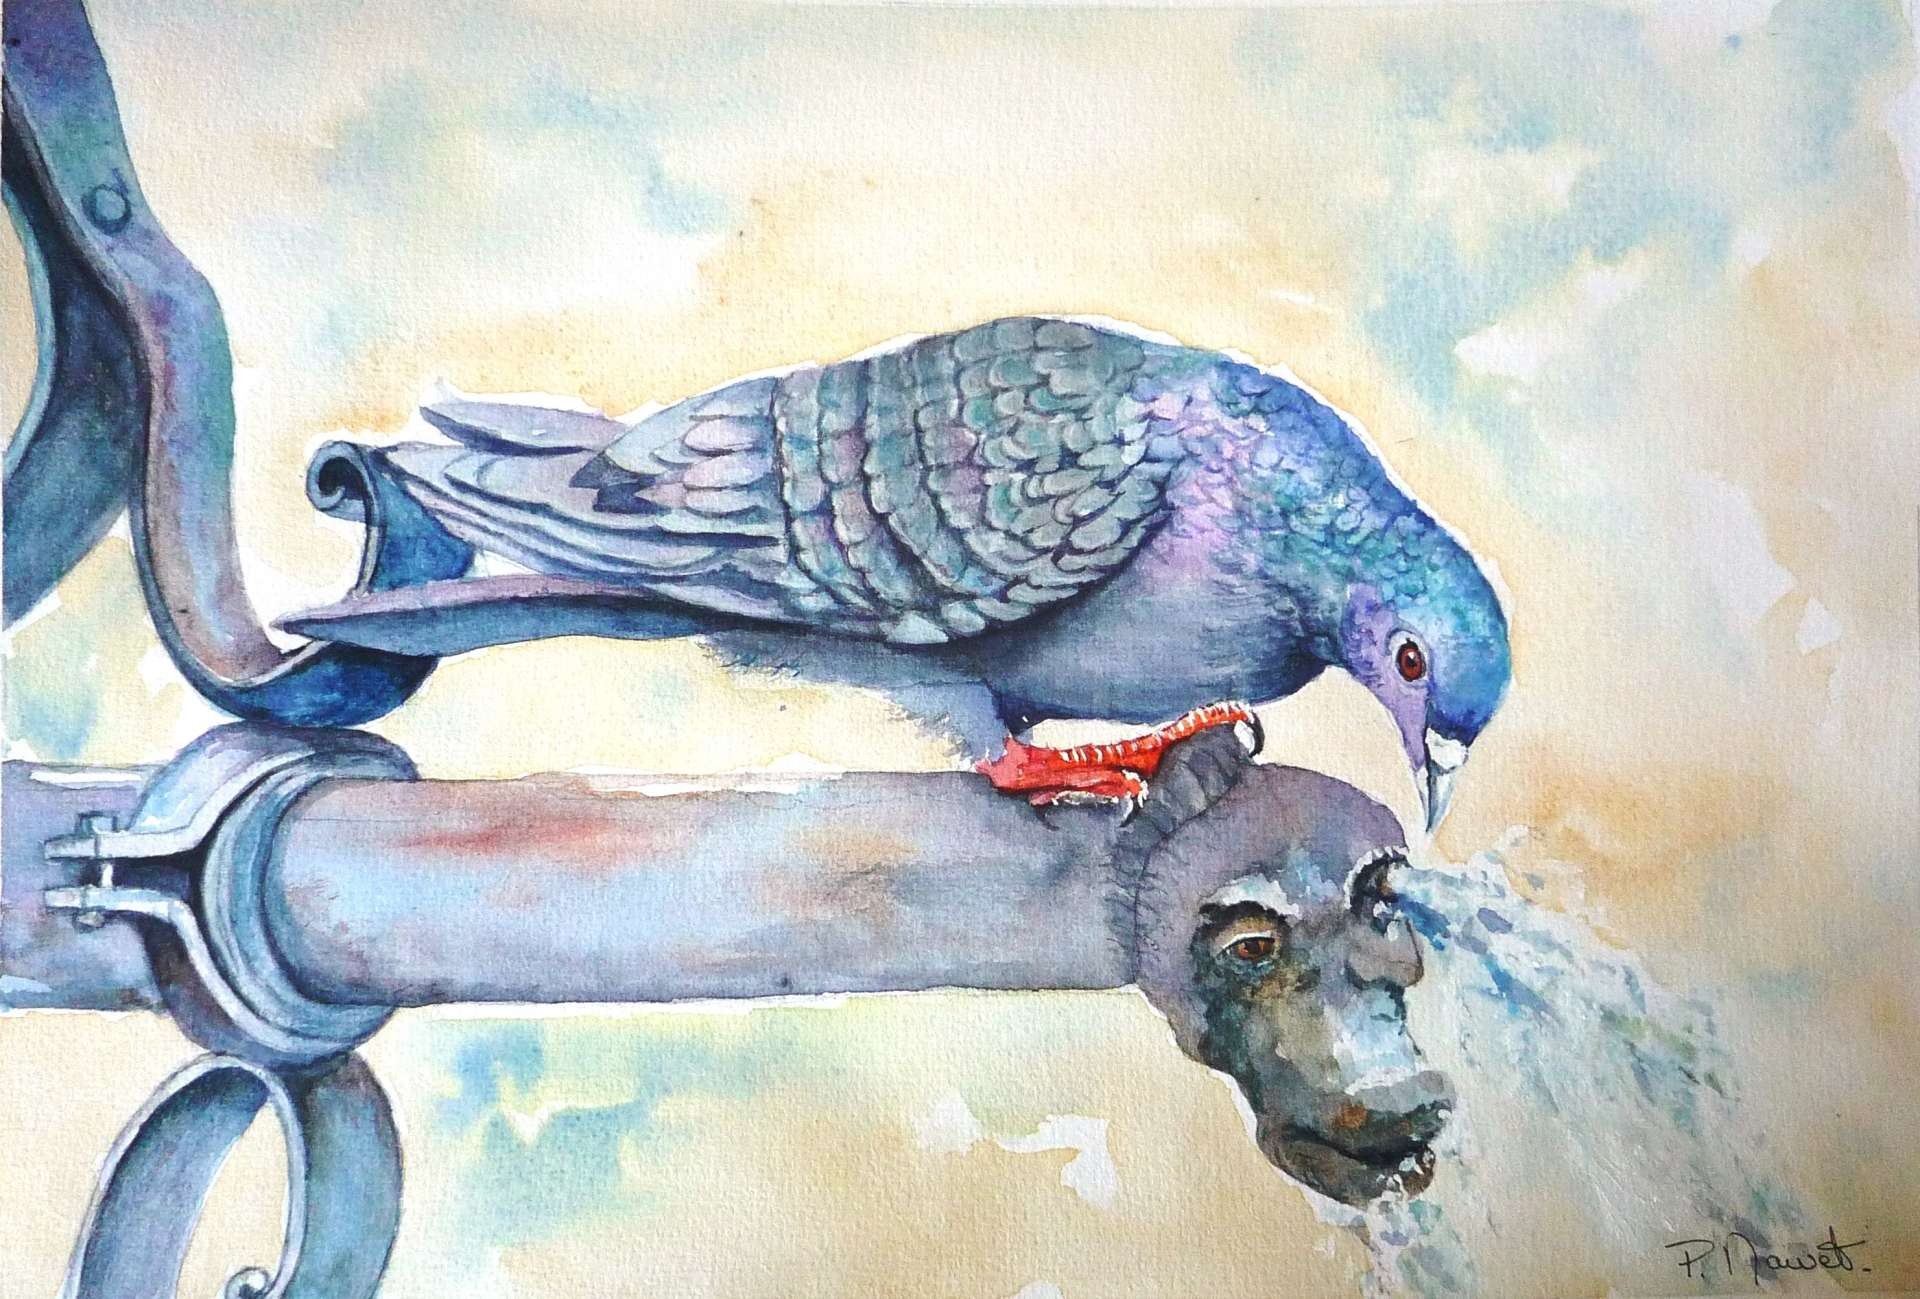 Pigeon.